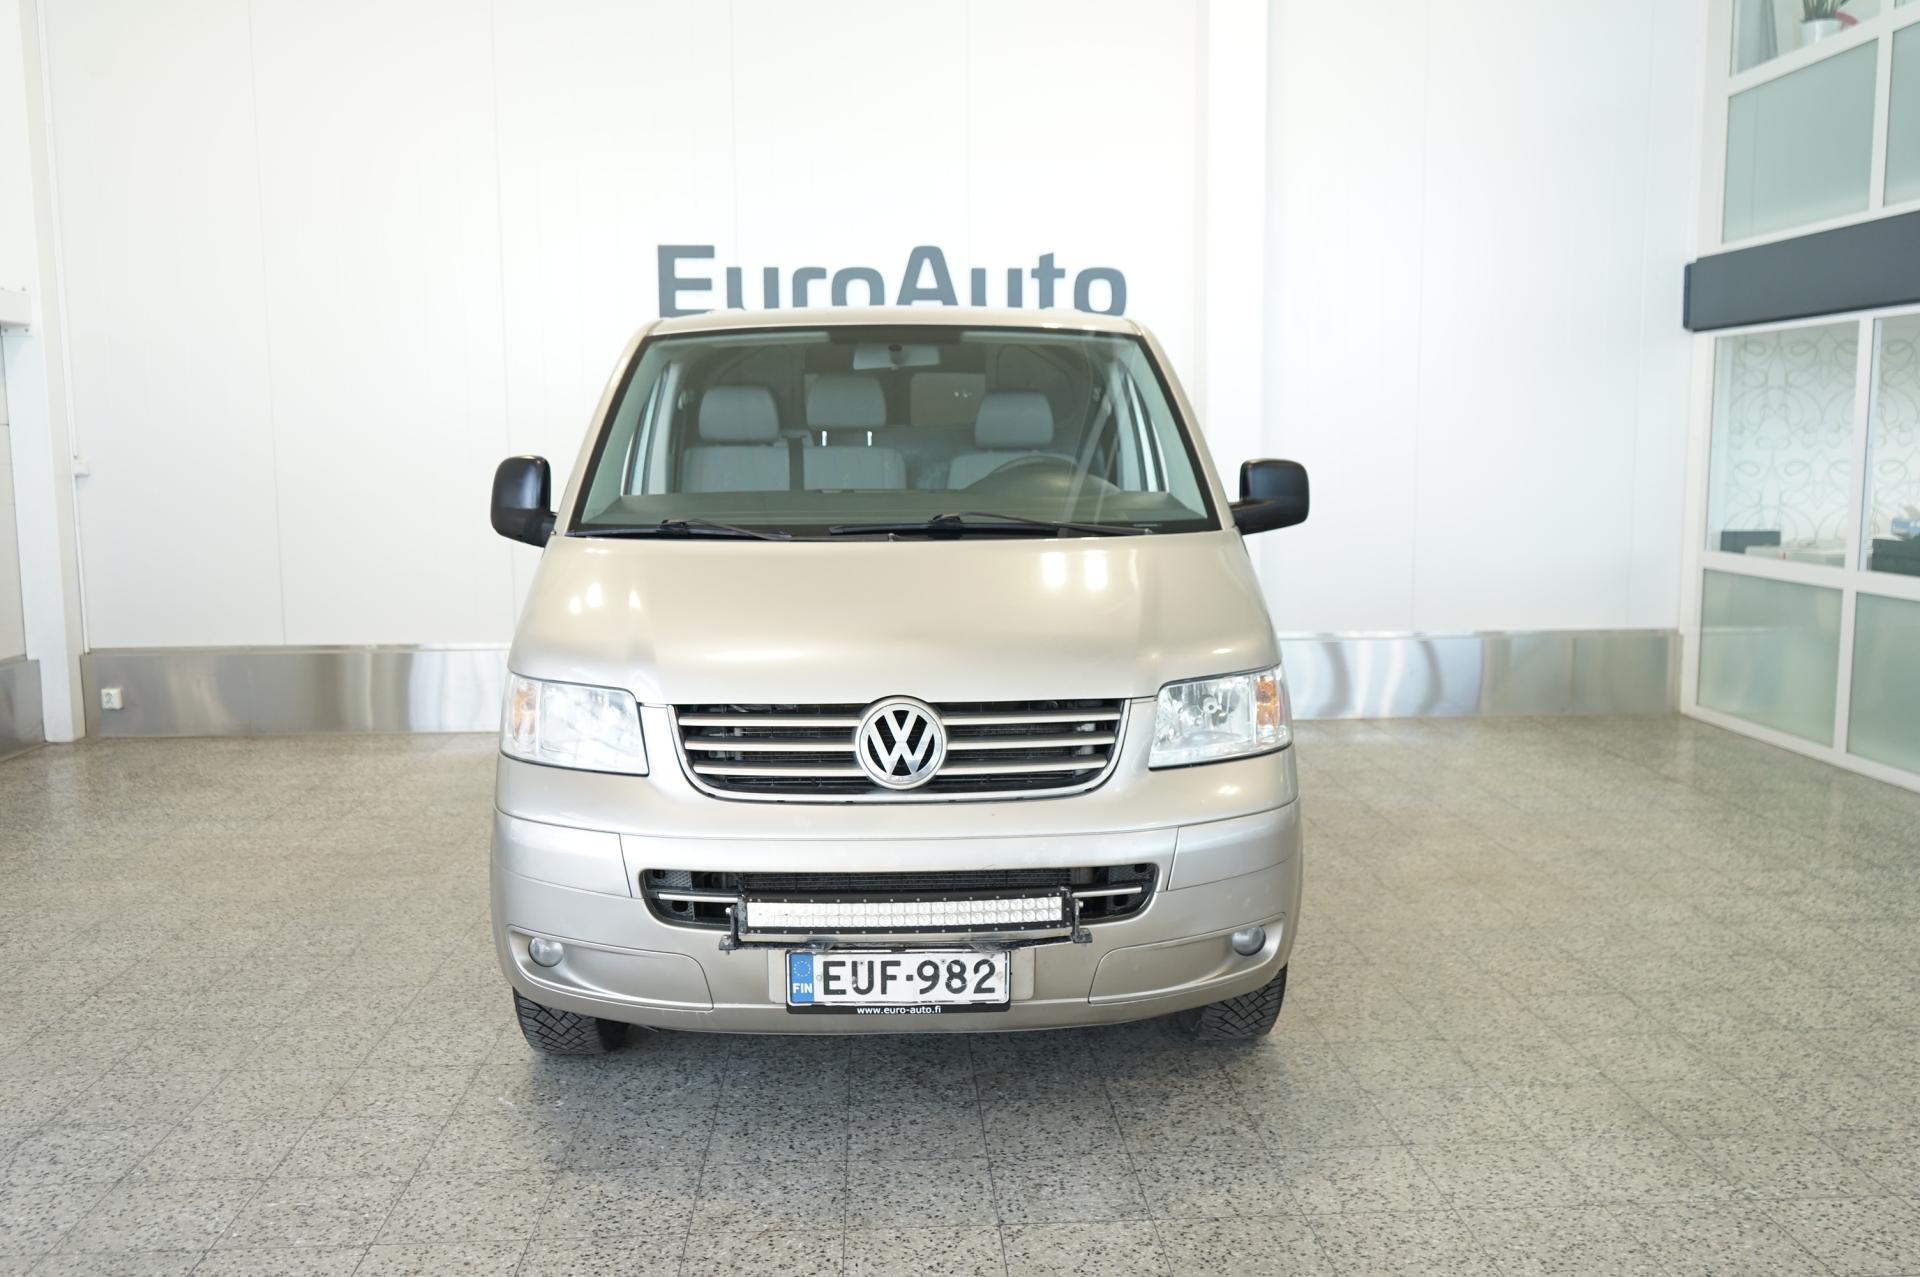 Volkswagen Transporter - EuroAuto